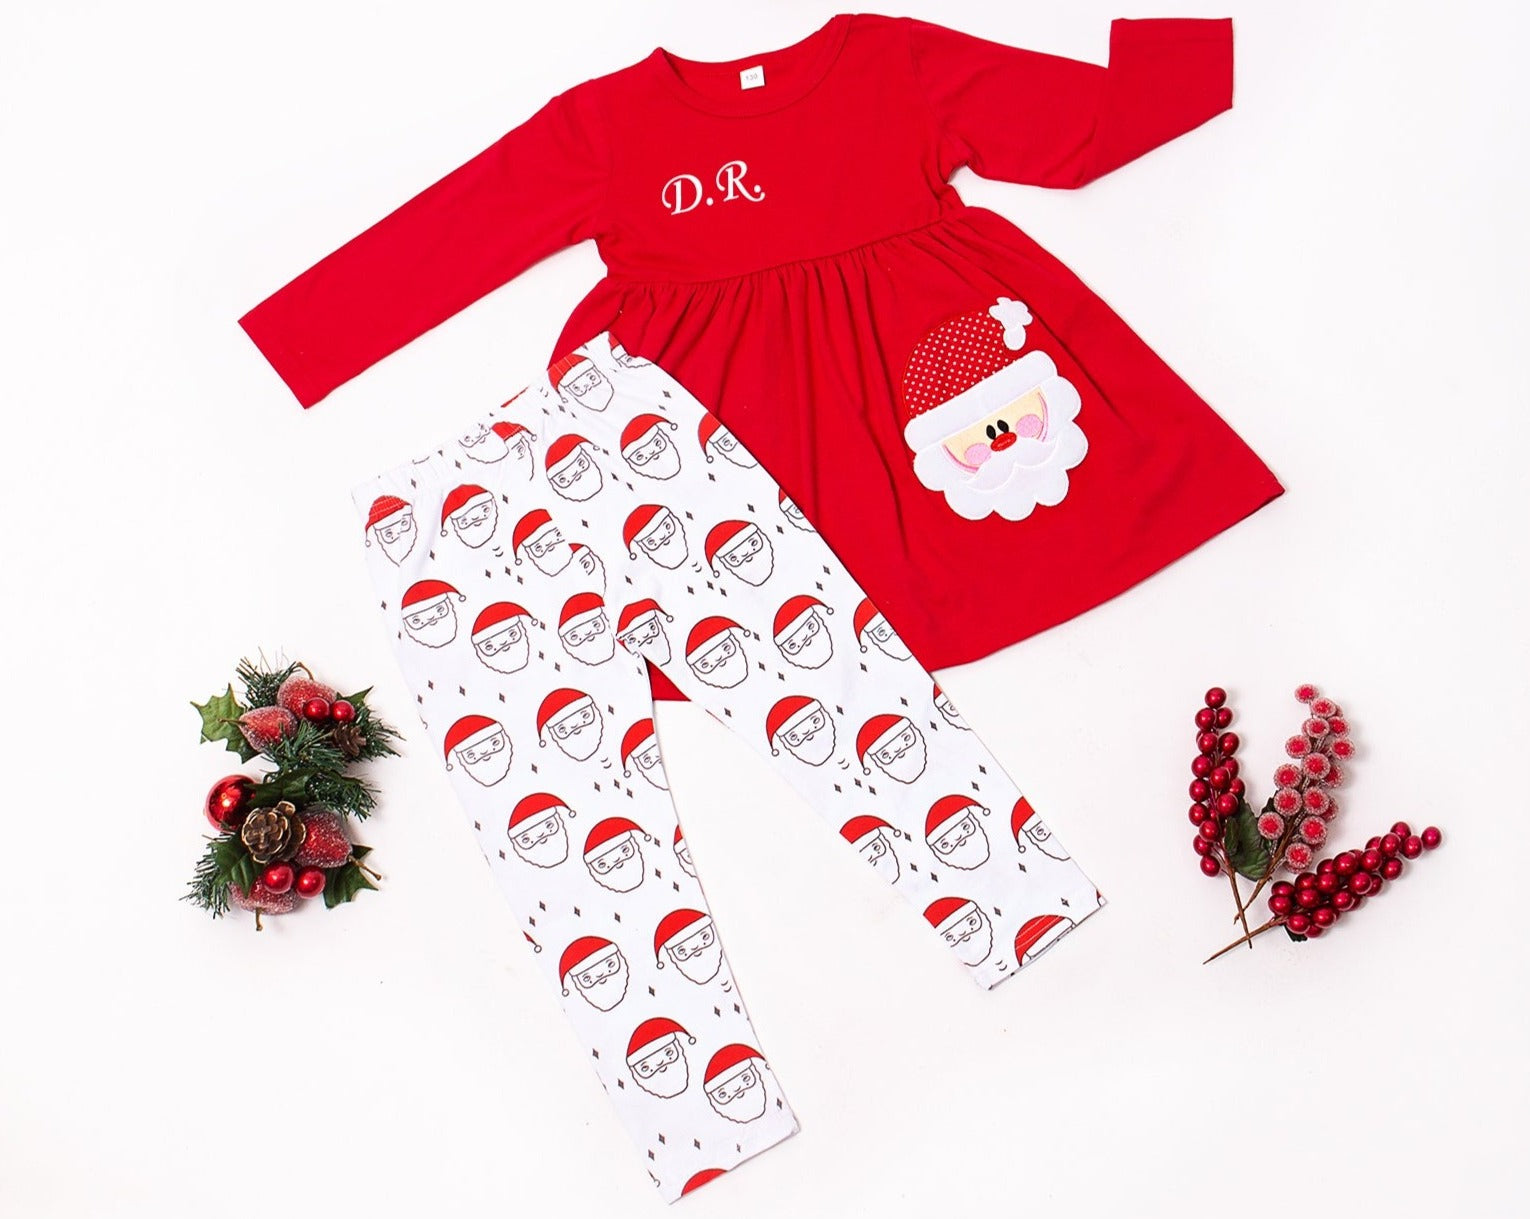 Gureui Kids Toddler Baby Girl Christmas Outfit Santa Print Dress Shirt  Tunic Top Plaid Leggings Pants Set with Scarf 1-6T 